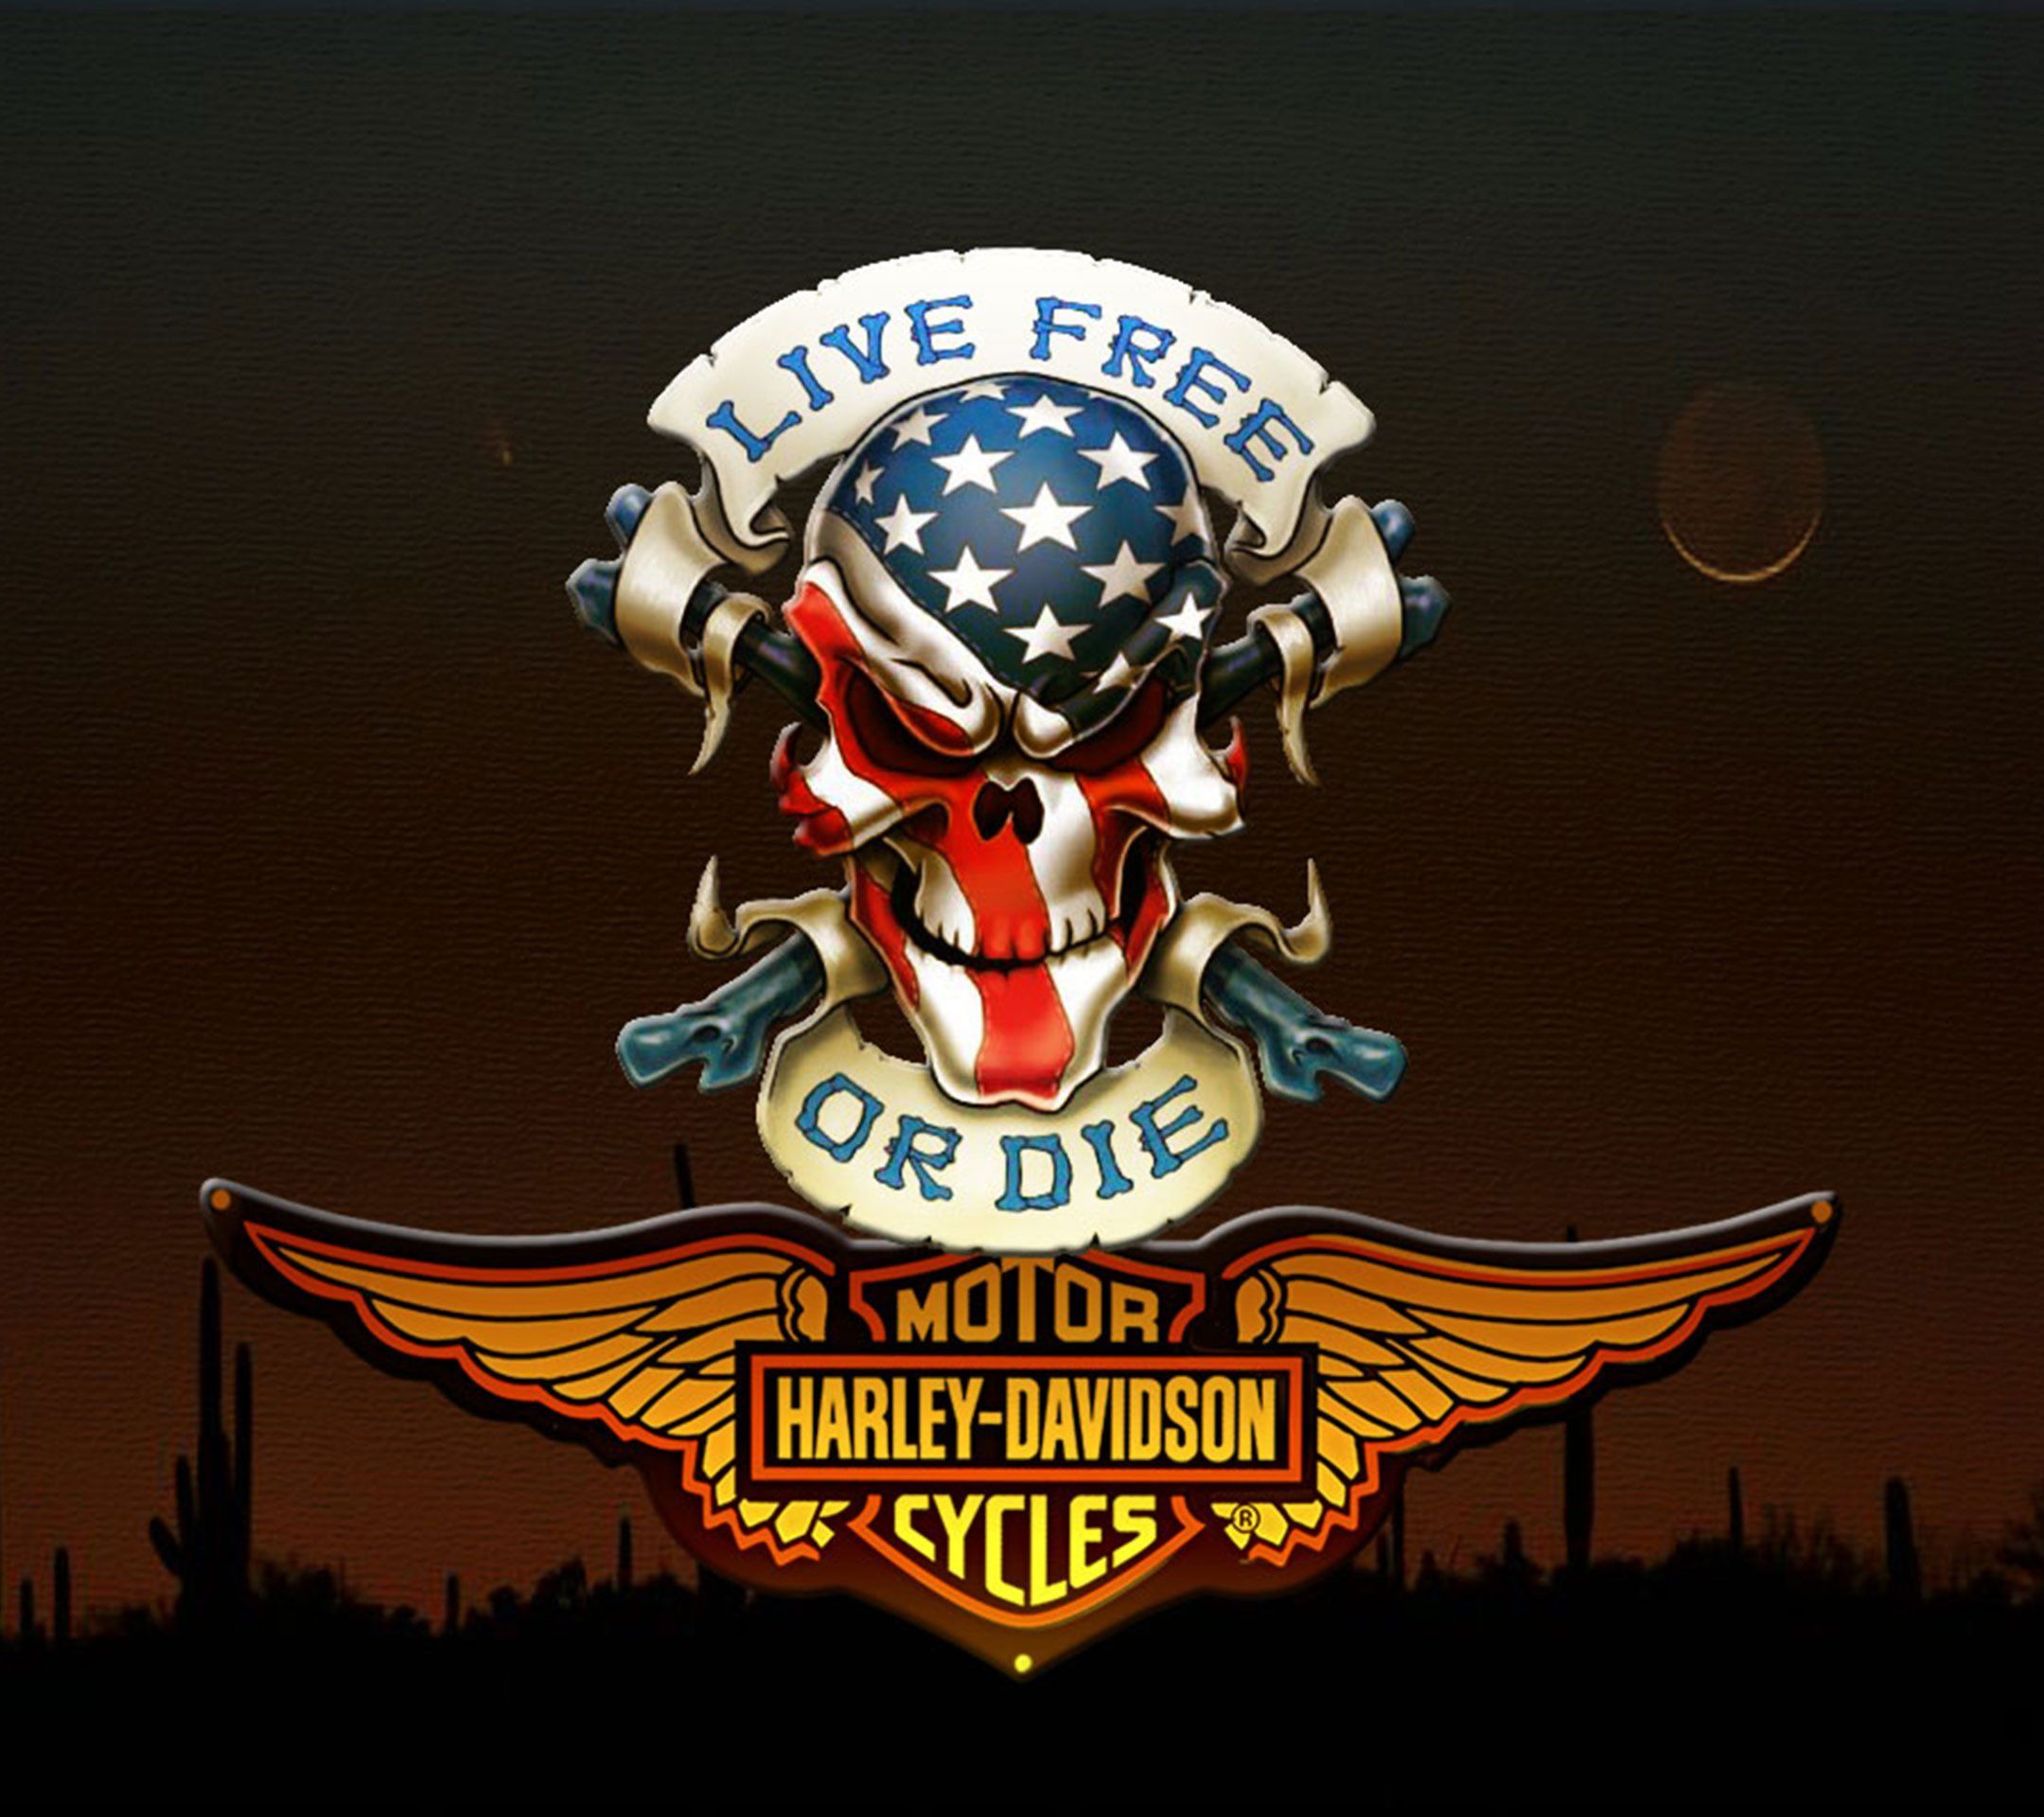 Harley davidson wallpaper .com